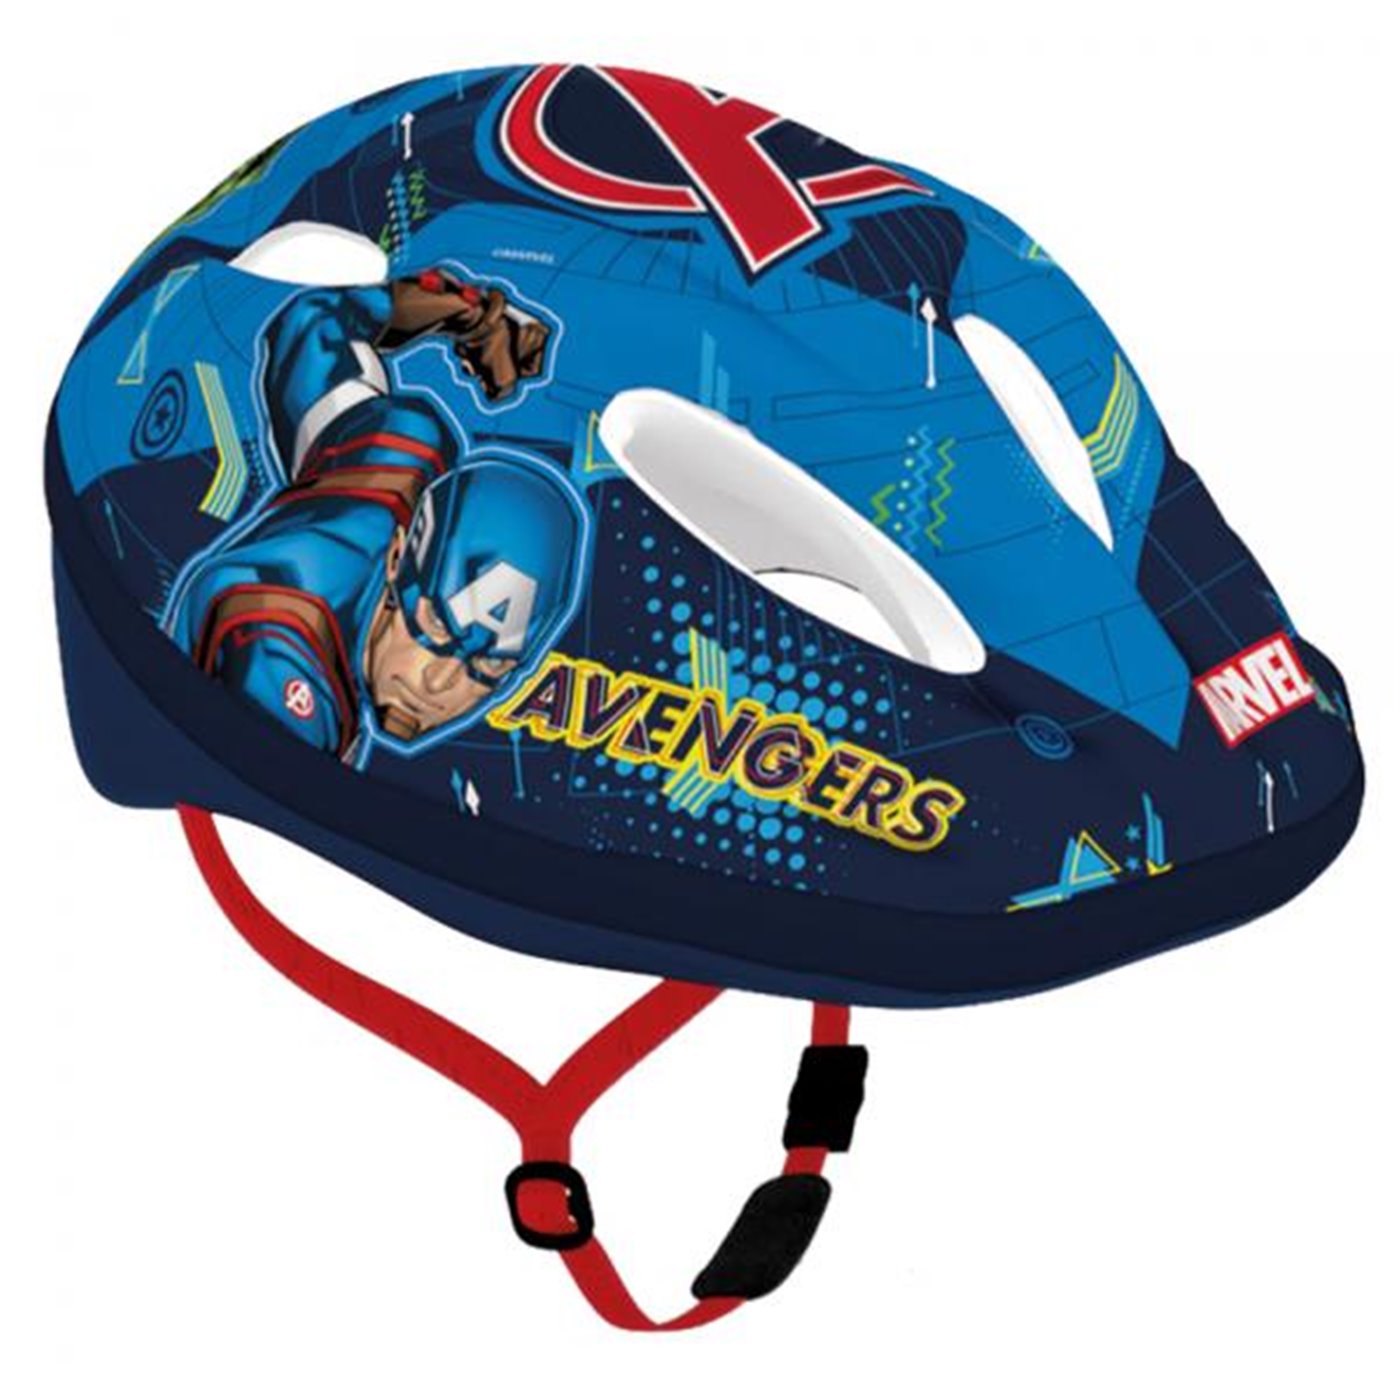 Casco da bici Avengers